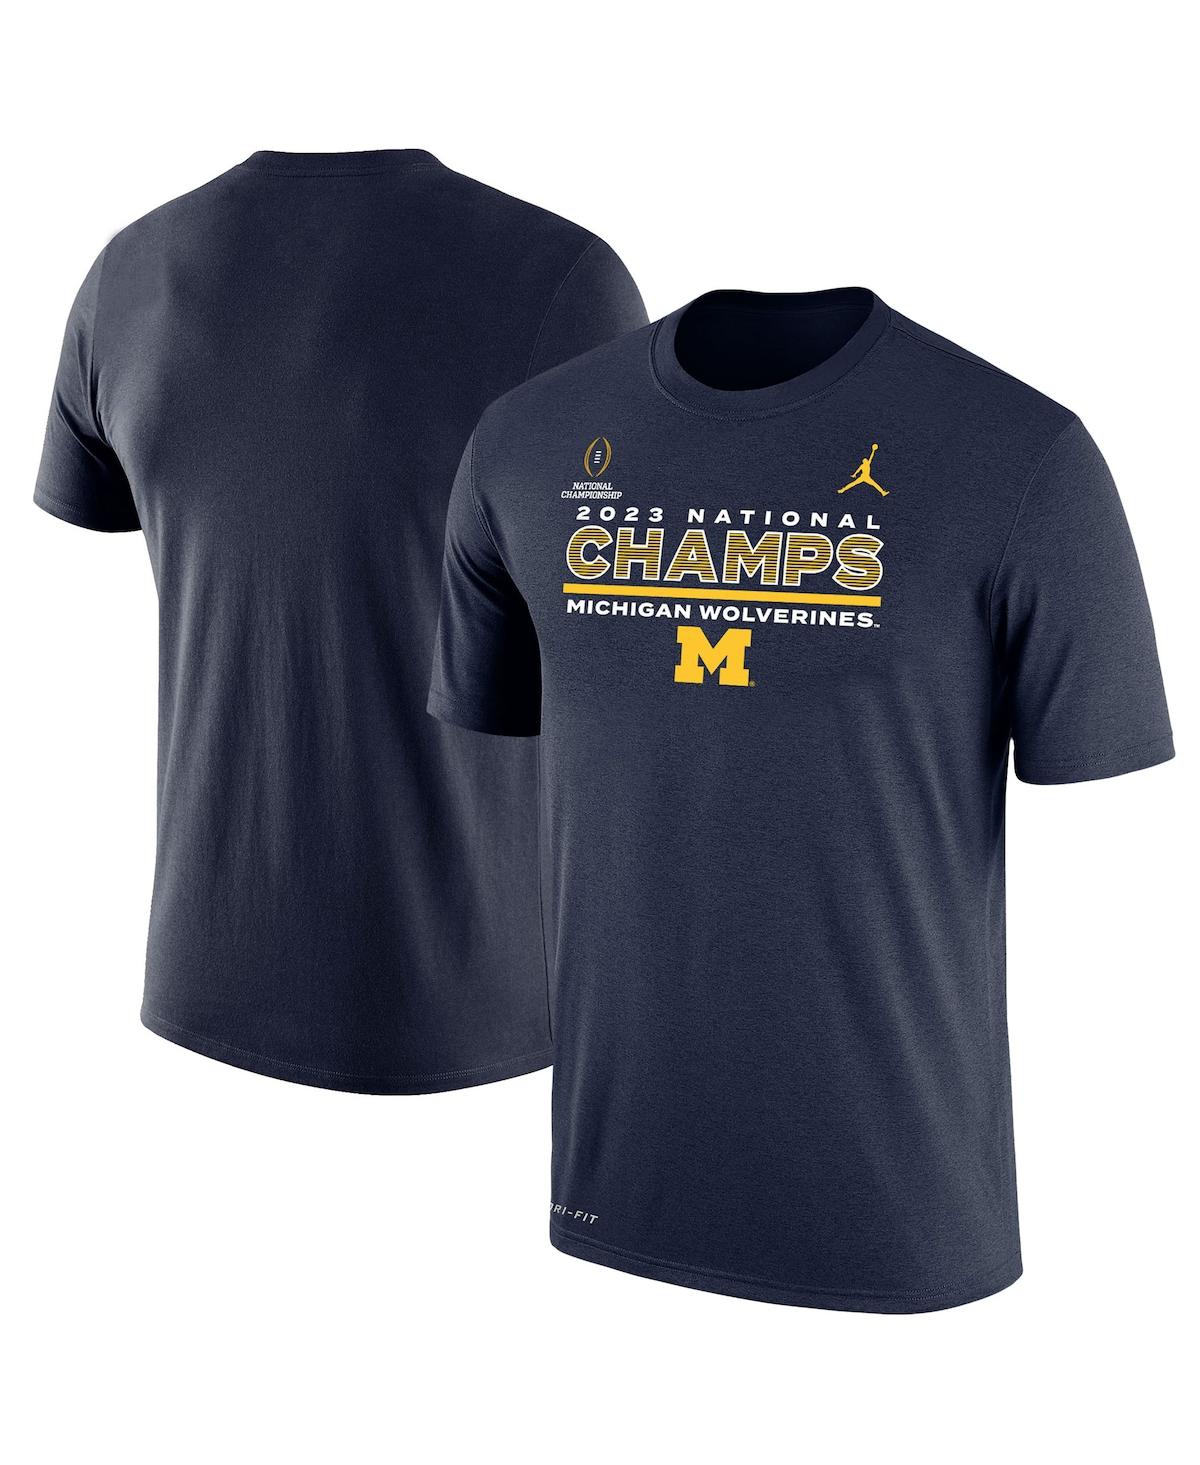 Men's Jordan Brand Navy Michigan Wolverines College Football Playoff 2023 National Champions Performance T-shirt - Navy